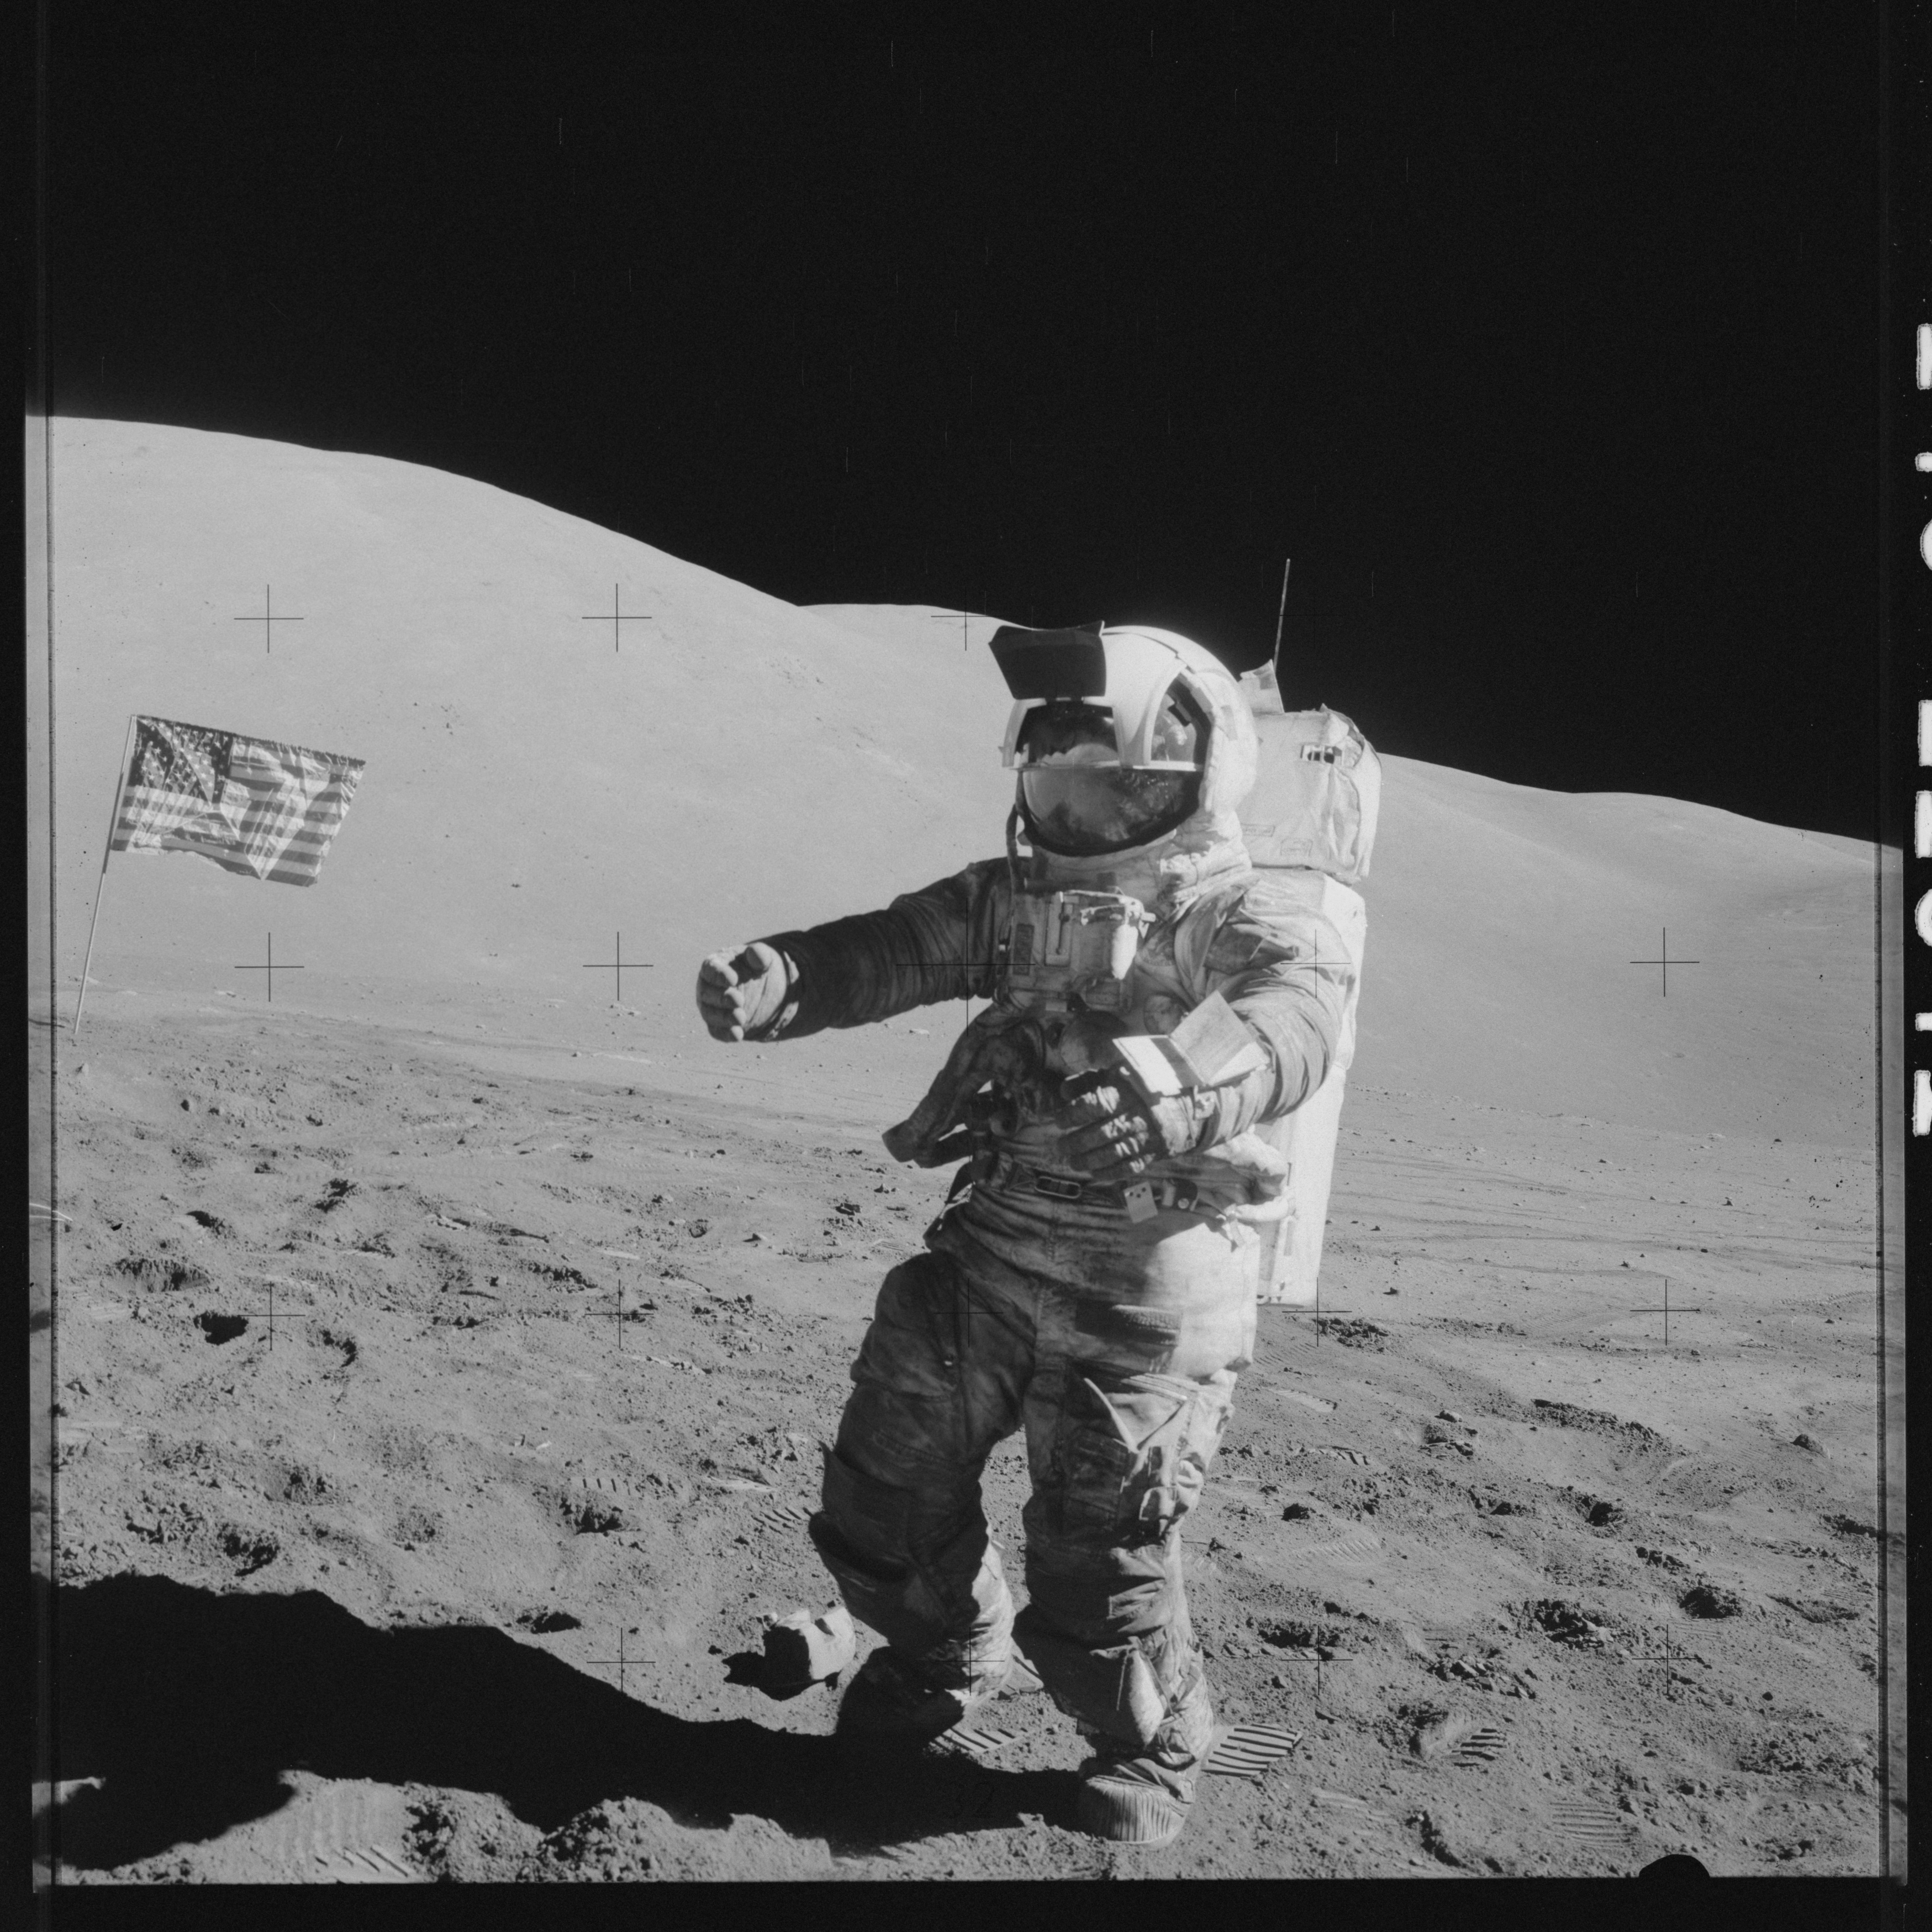 Первый выход человека на луну. Аполлон 17. Шмитт астронавт фото НАСА Аполлон 17. Аполлон 17 на Луне. 1969 Первый человек на Луне.